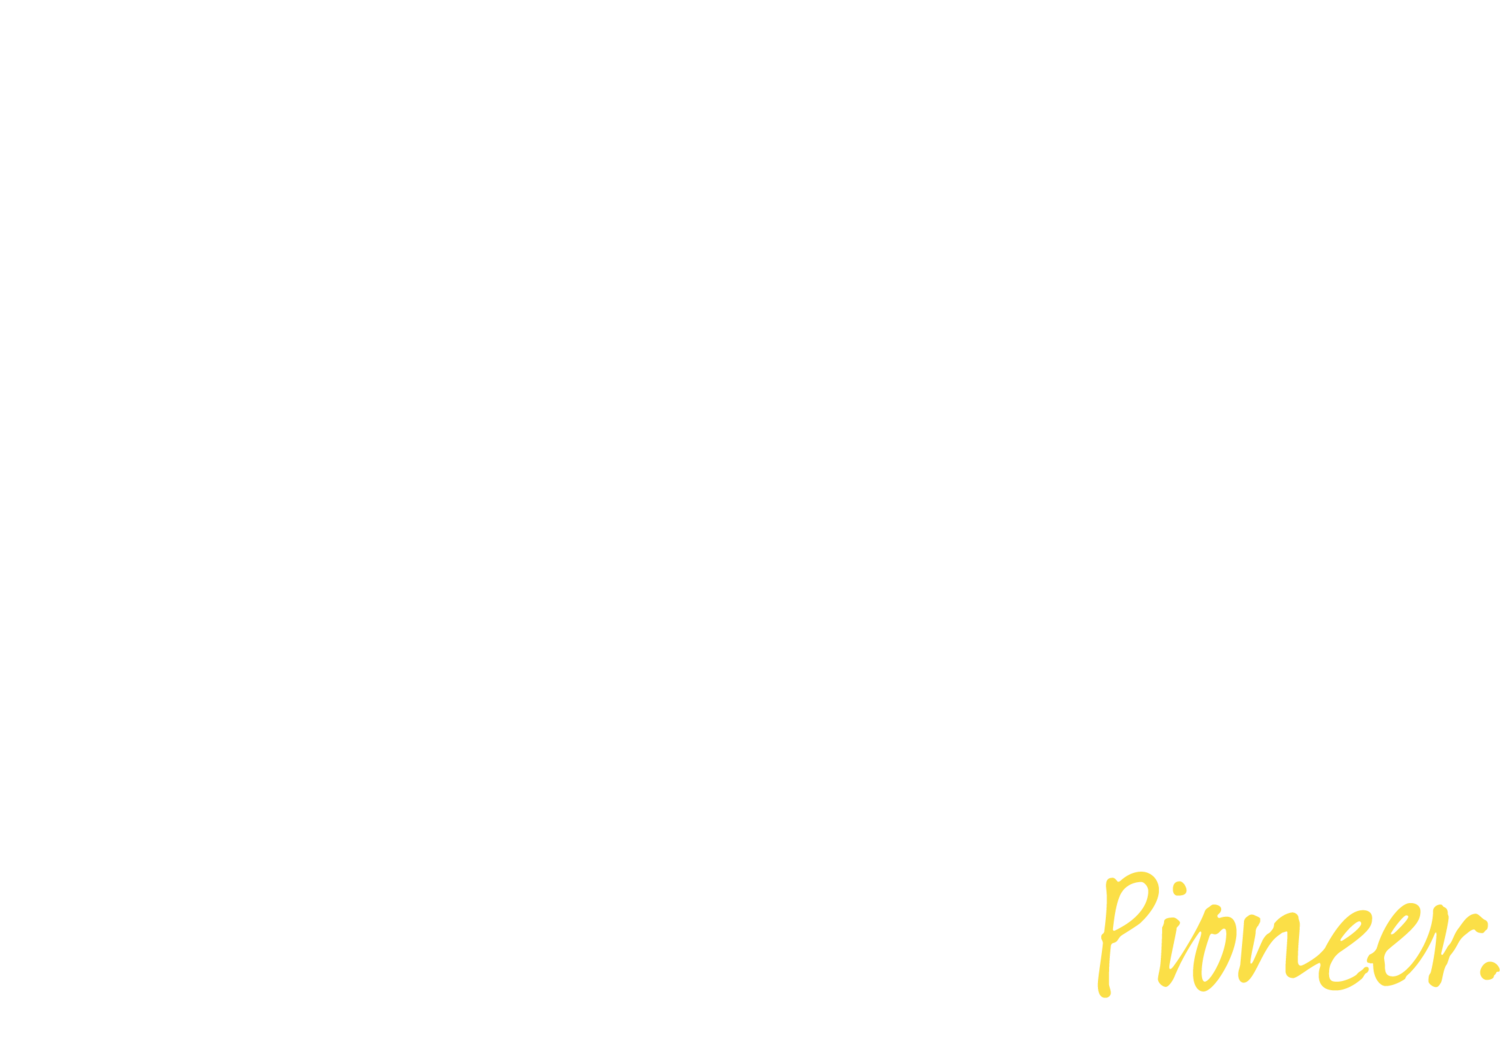 The Peak School